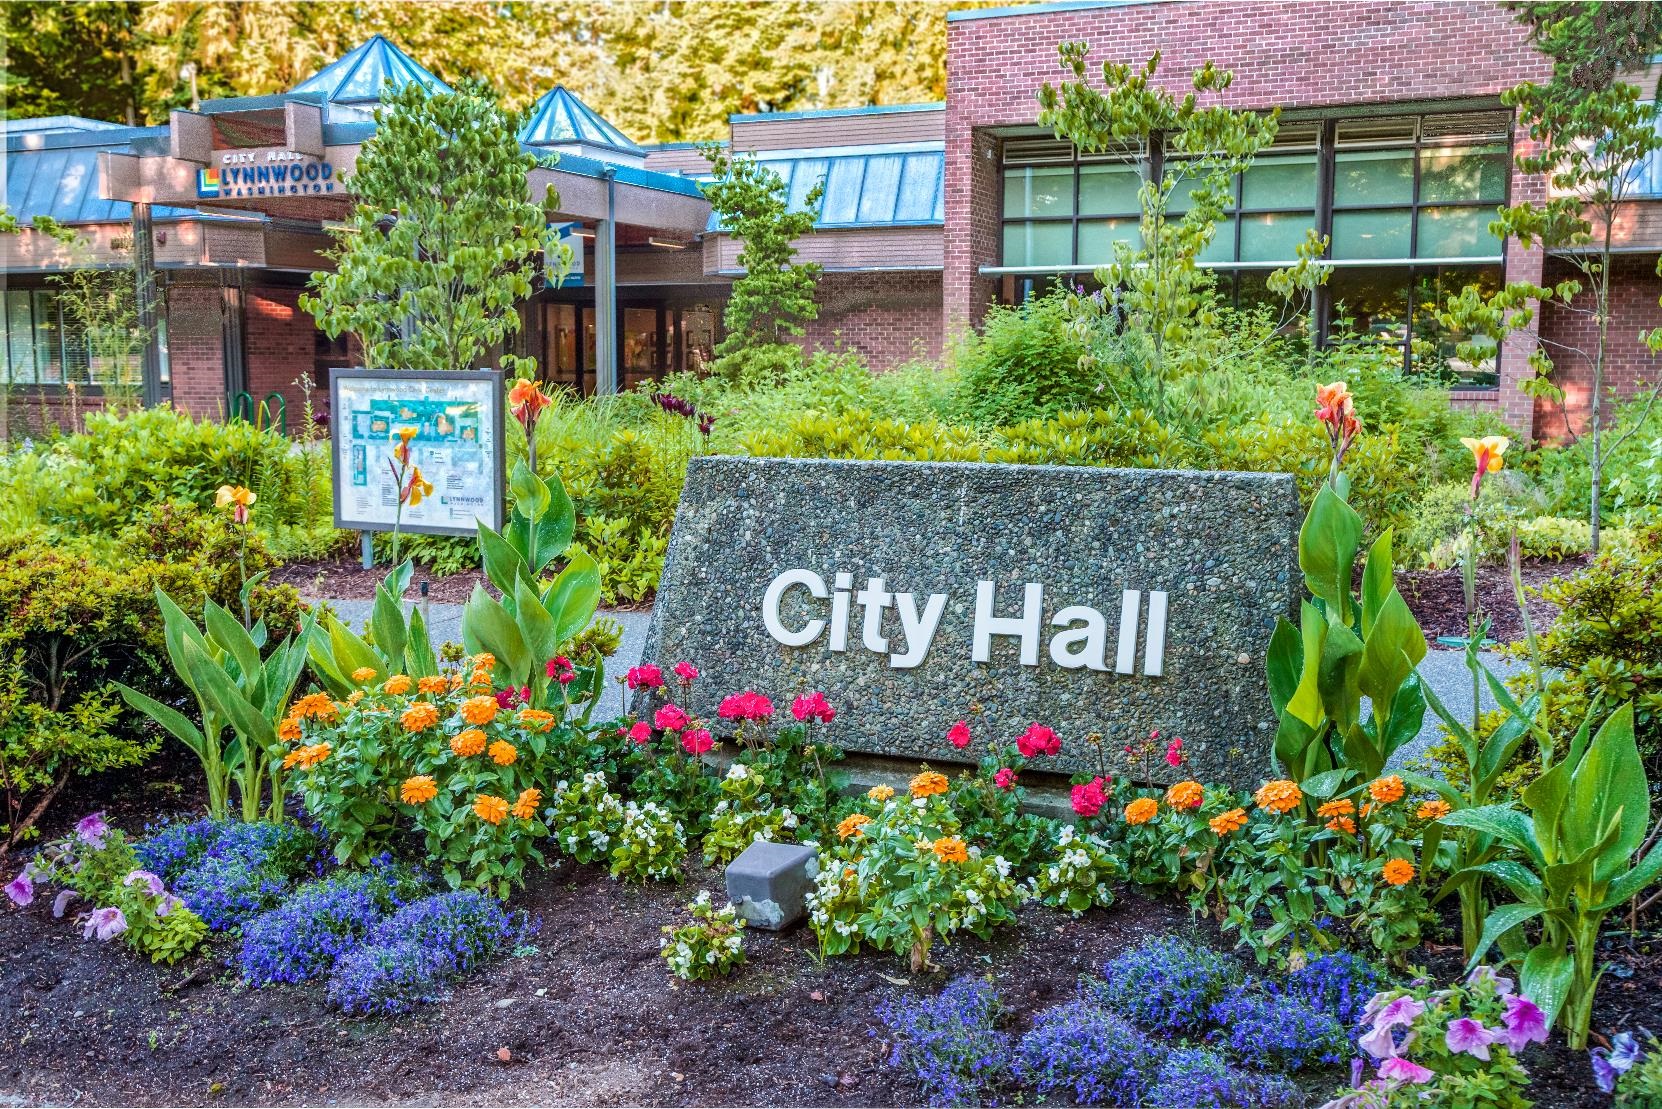 City Hall Flowers